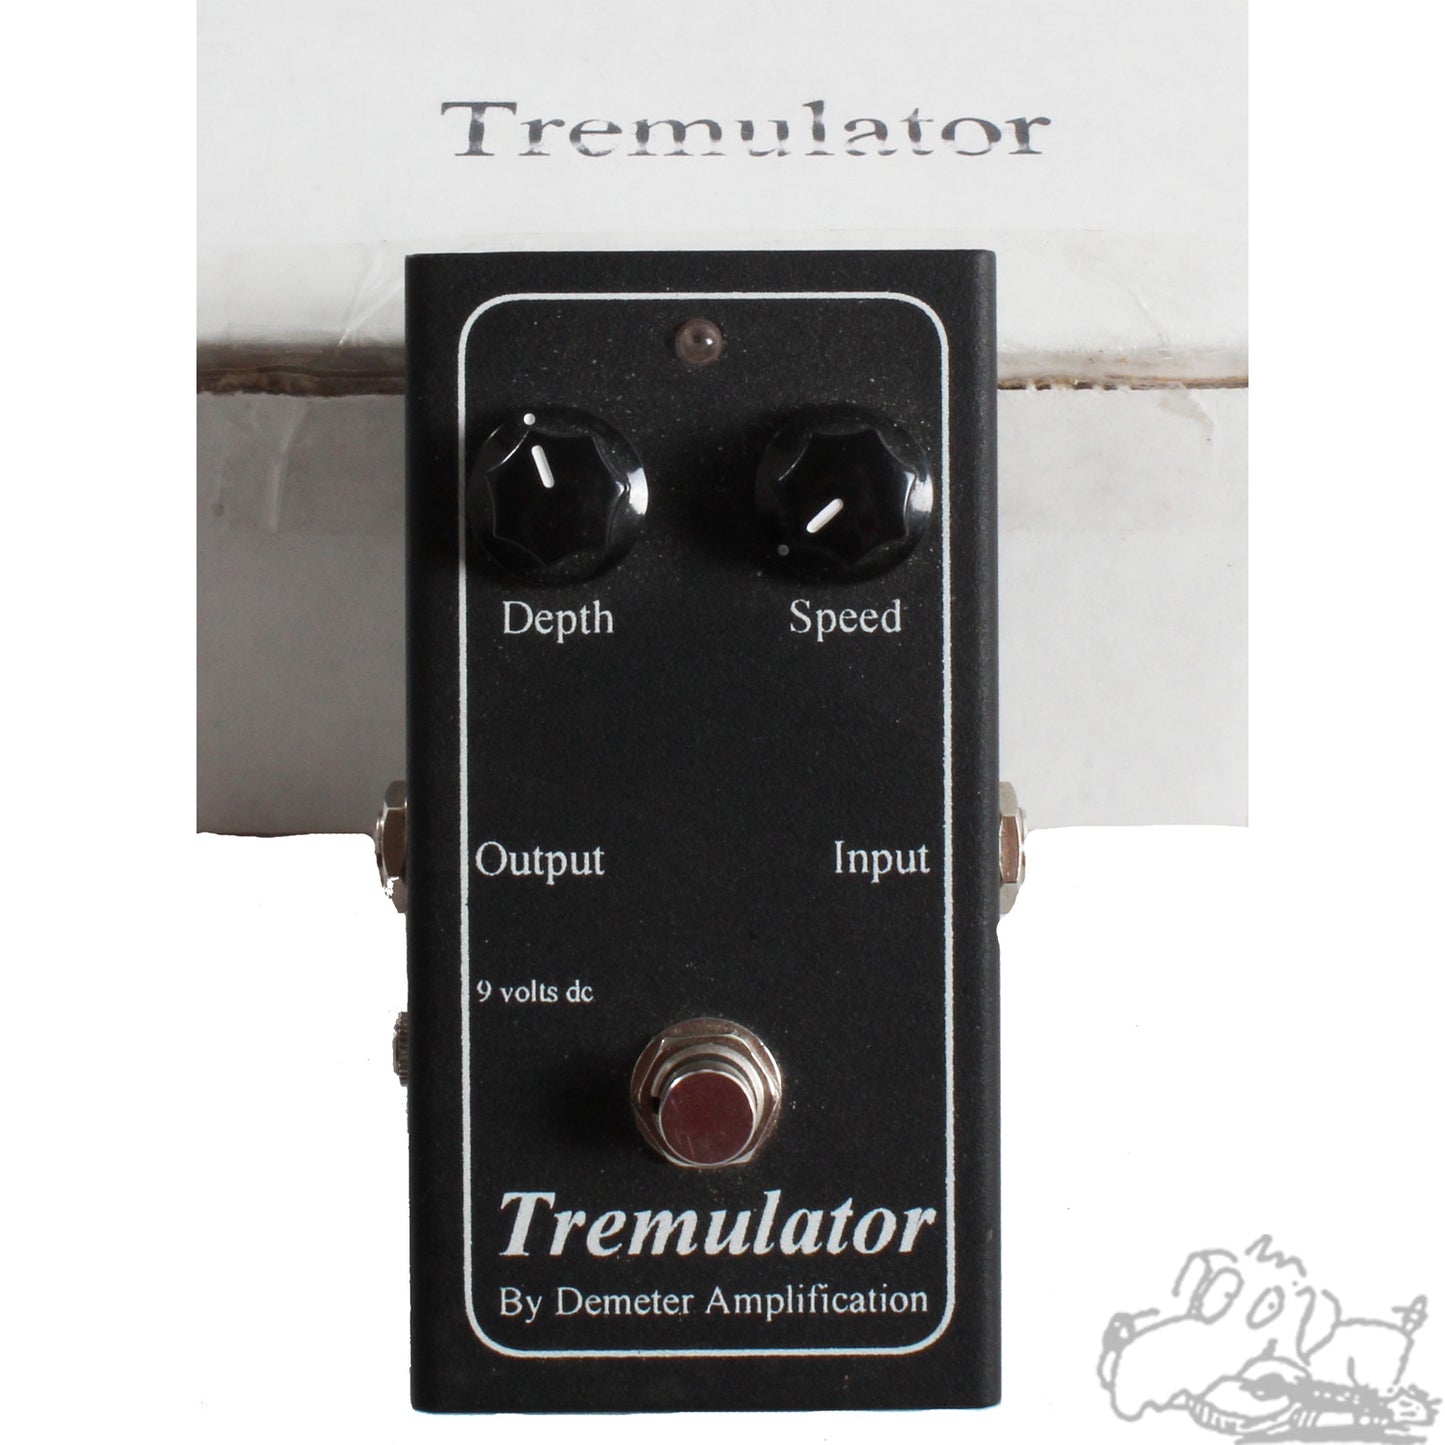 Demeter Amplification Tremulator